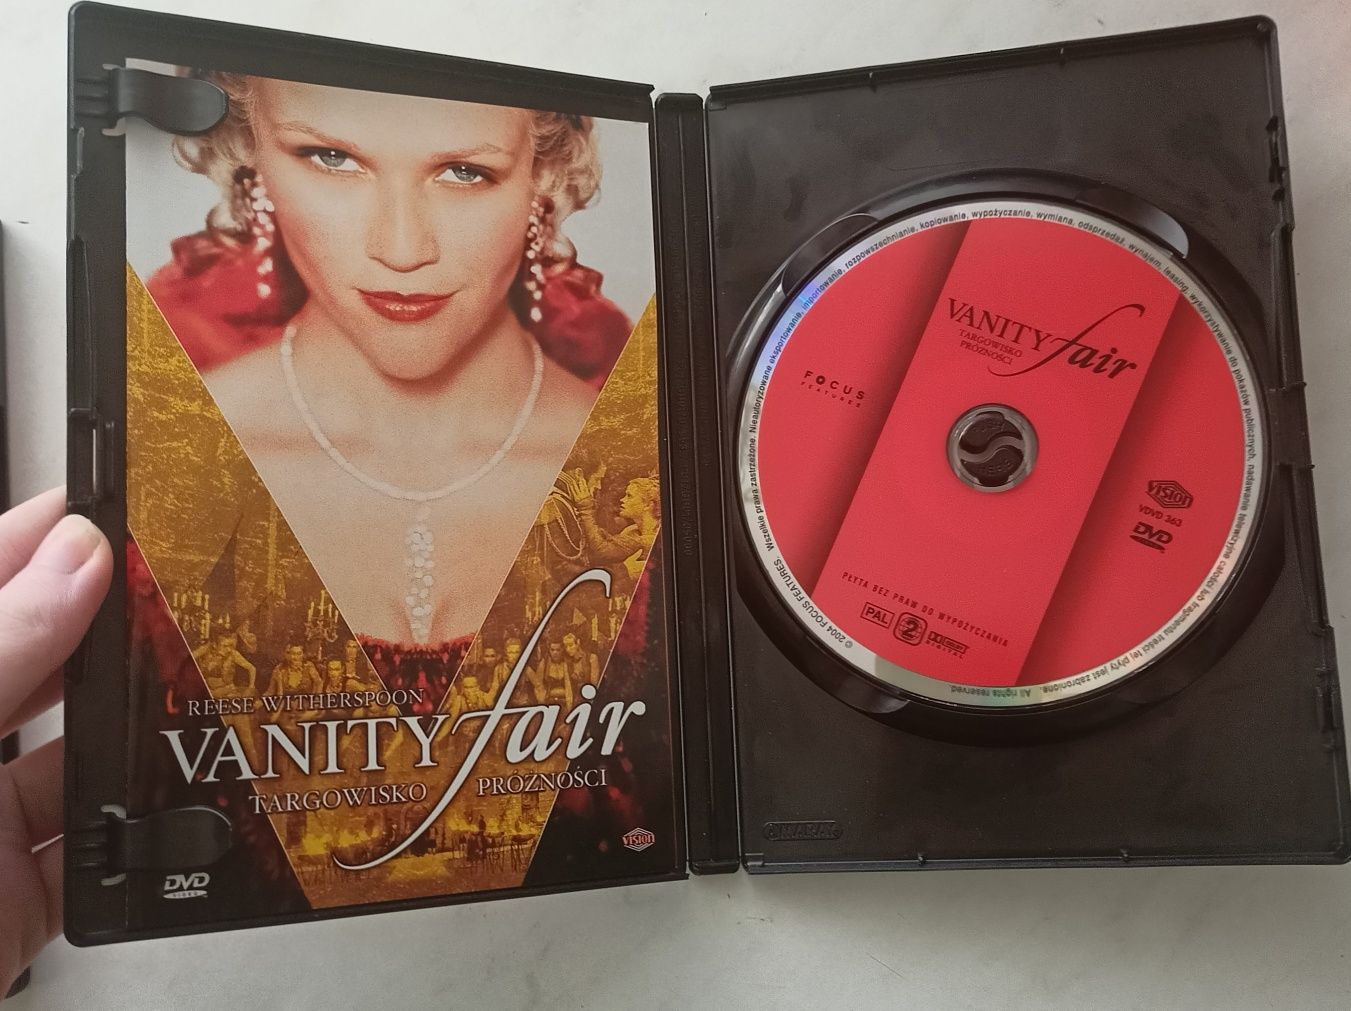 Vanity Fair. Targowisko próżności na DVD